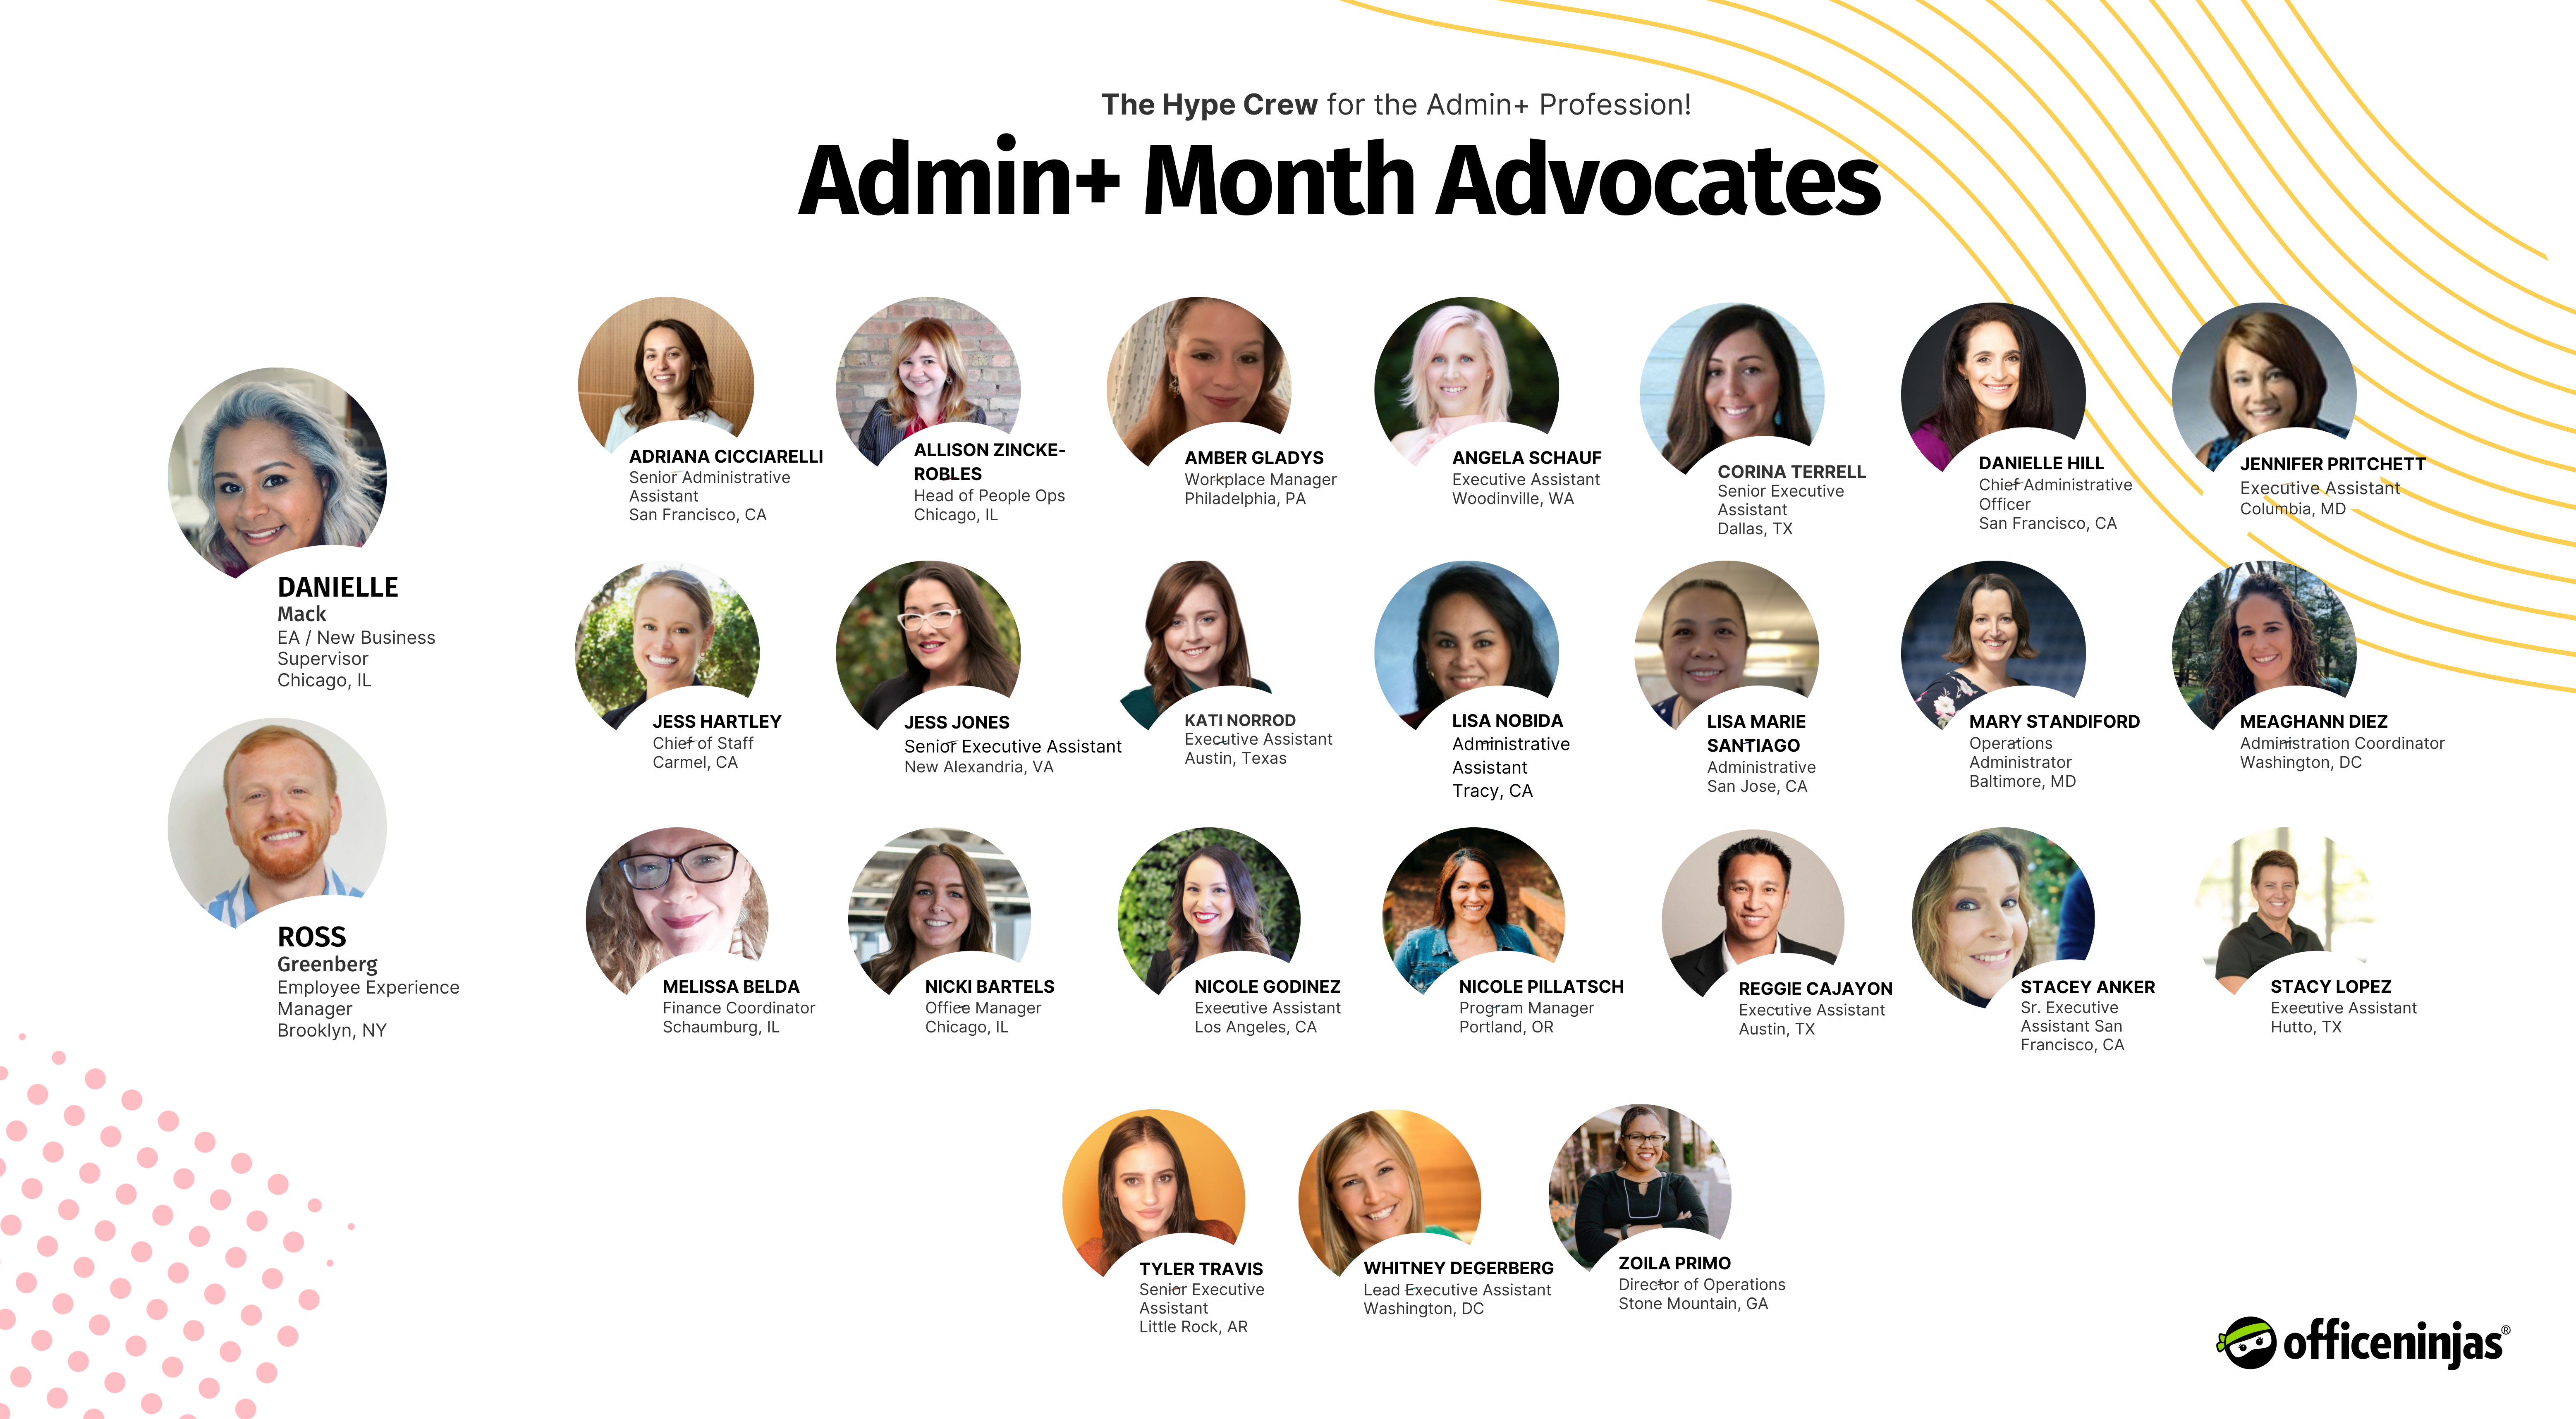 Members of the OfficeNinjas 2022 Admin+ Month Advocate Team.